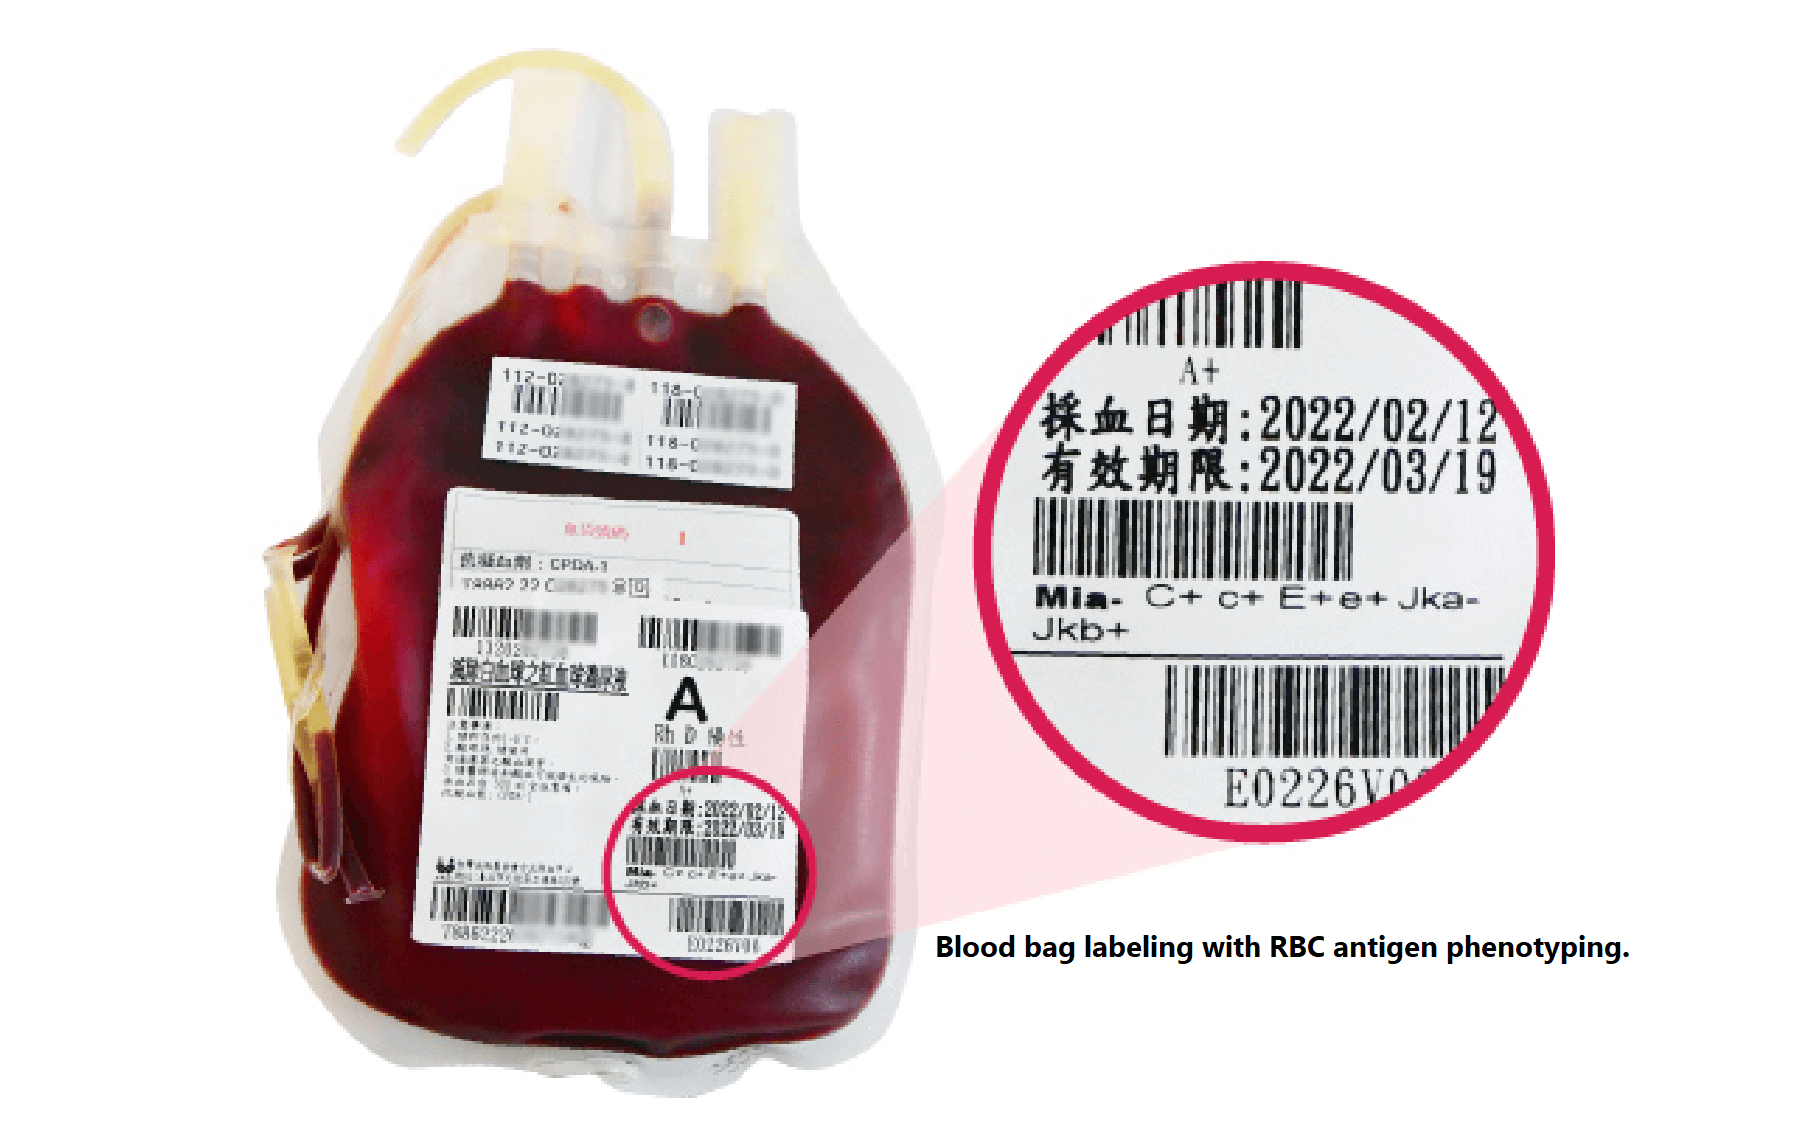 The diagram provides an example illustration of blood bag labeling: the blood bag comprehensively displays 7 blood type antigens.